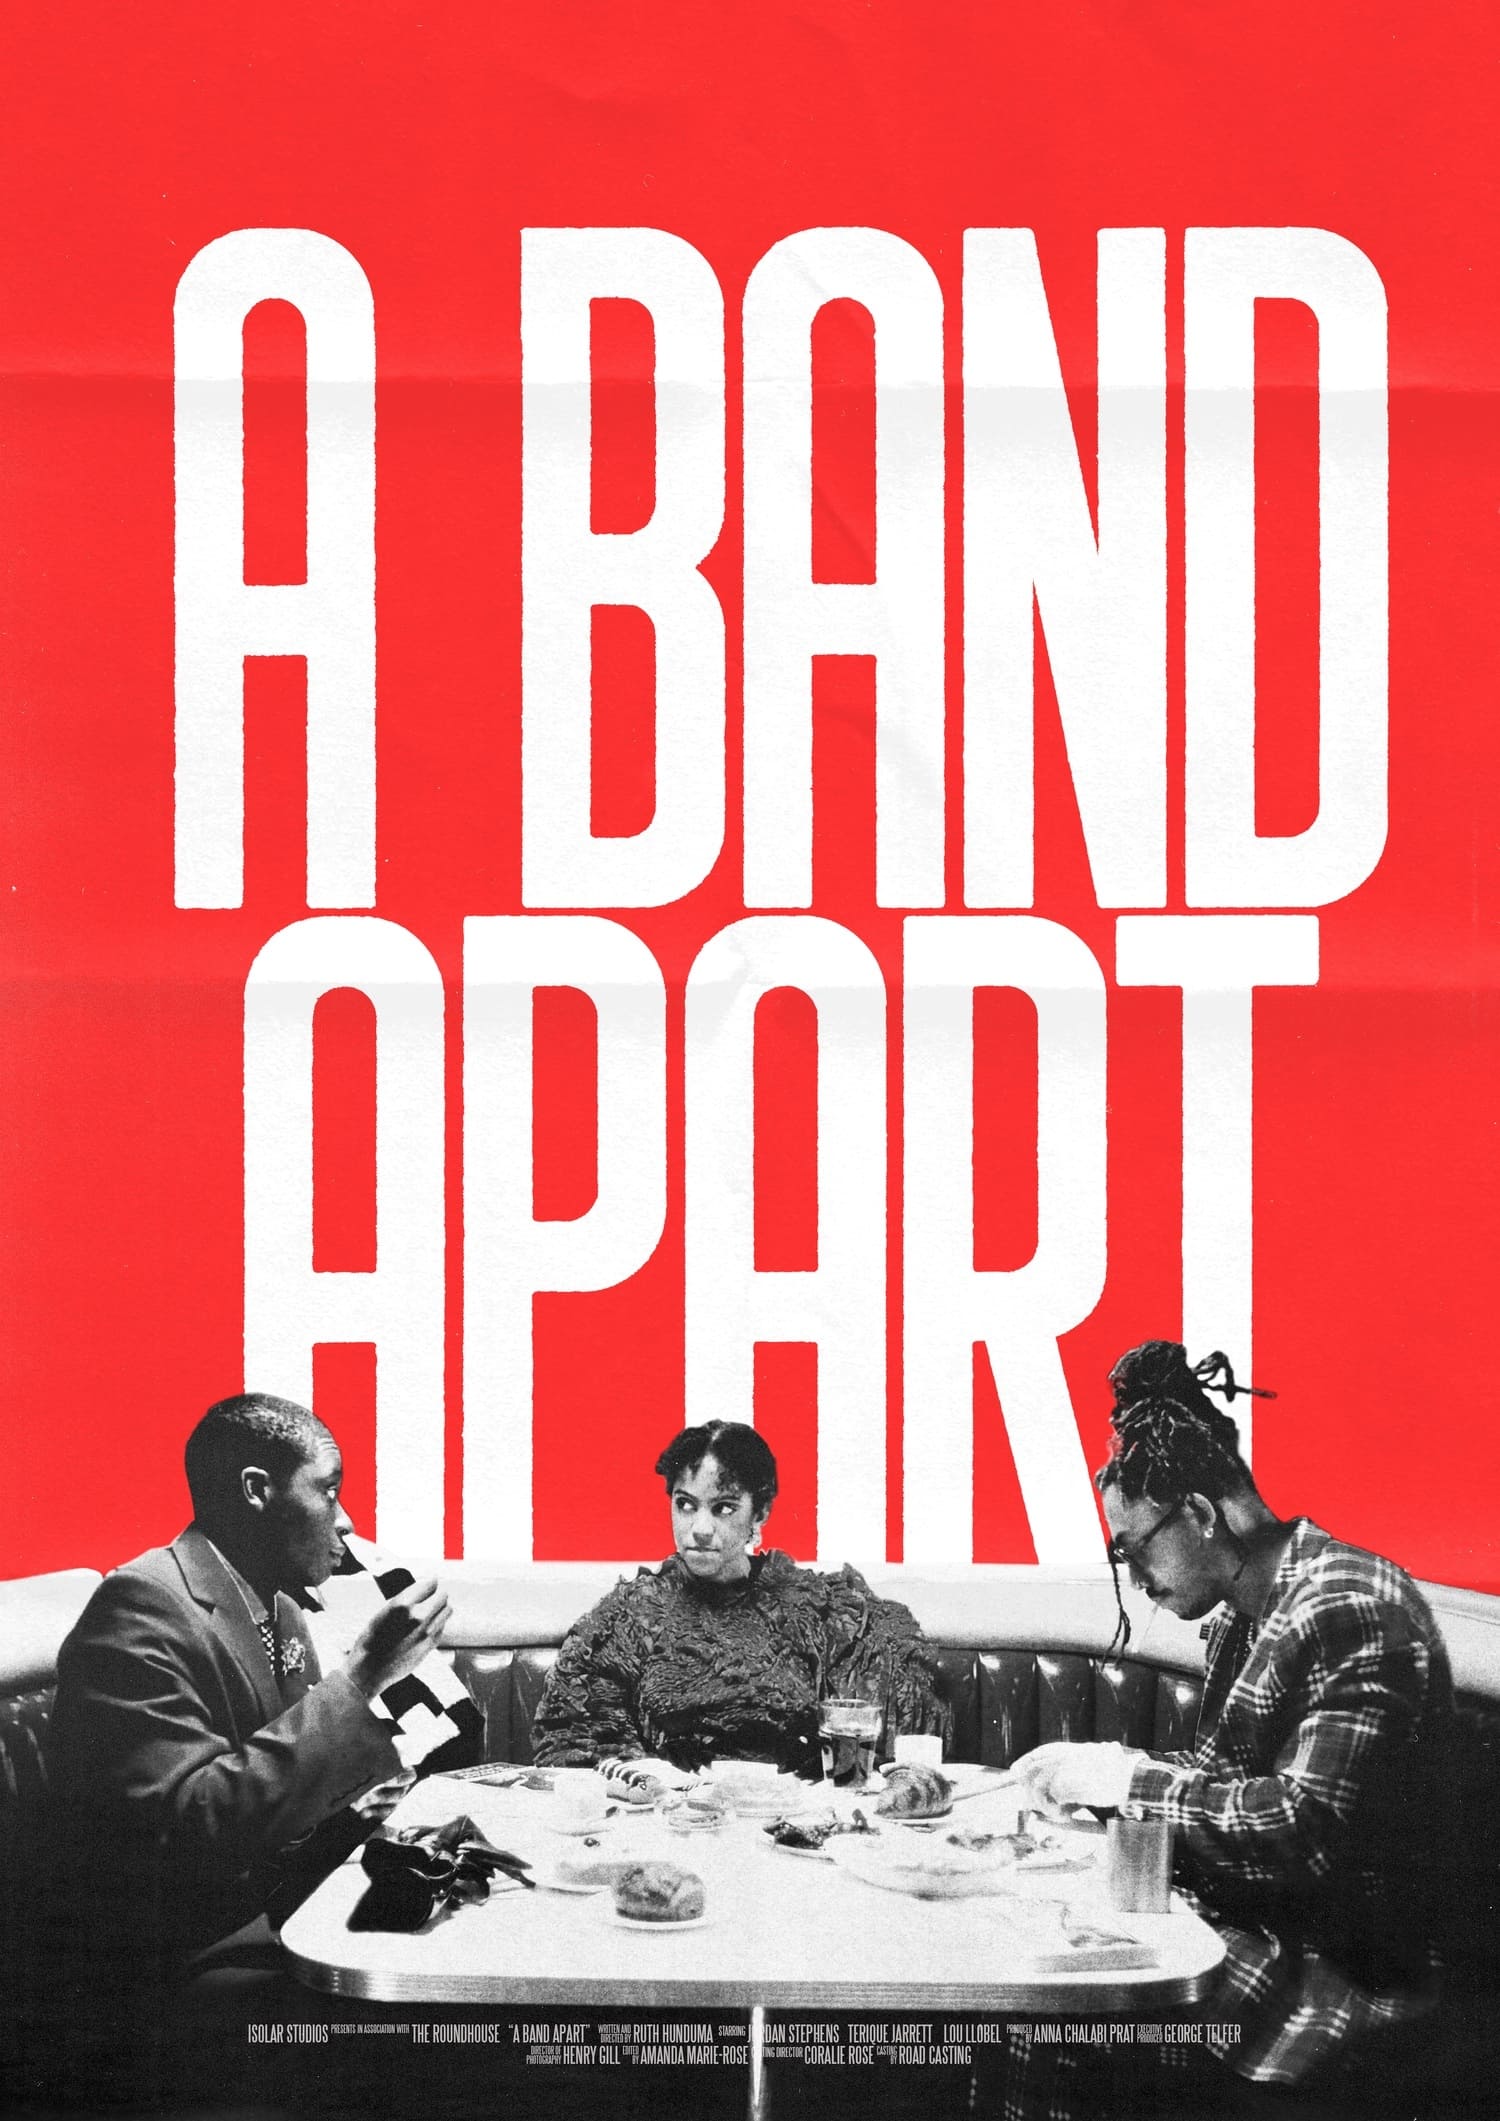 A Band Apart